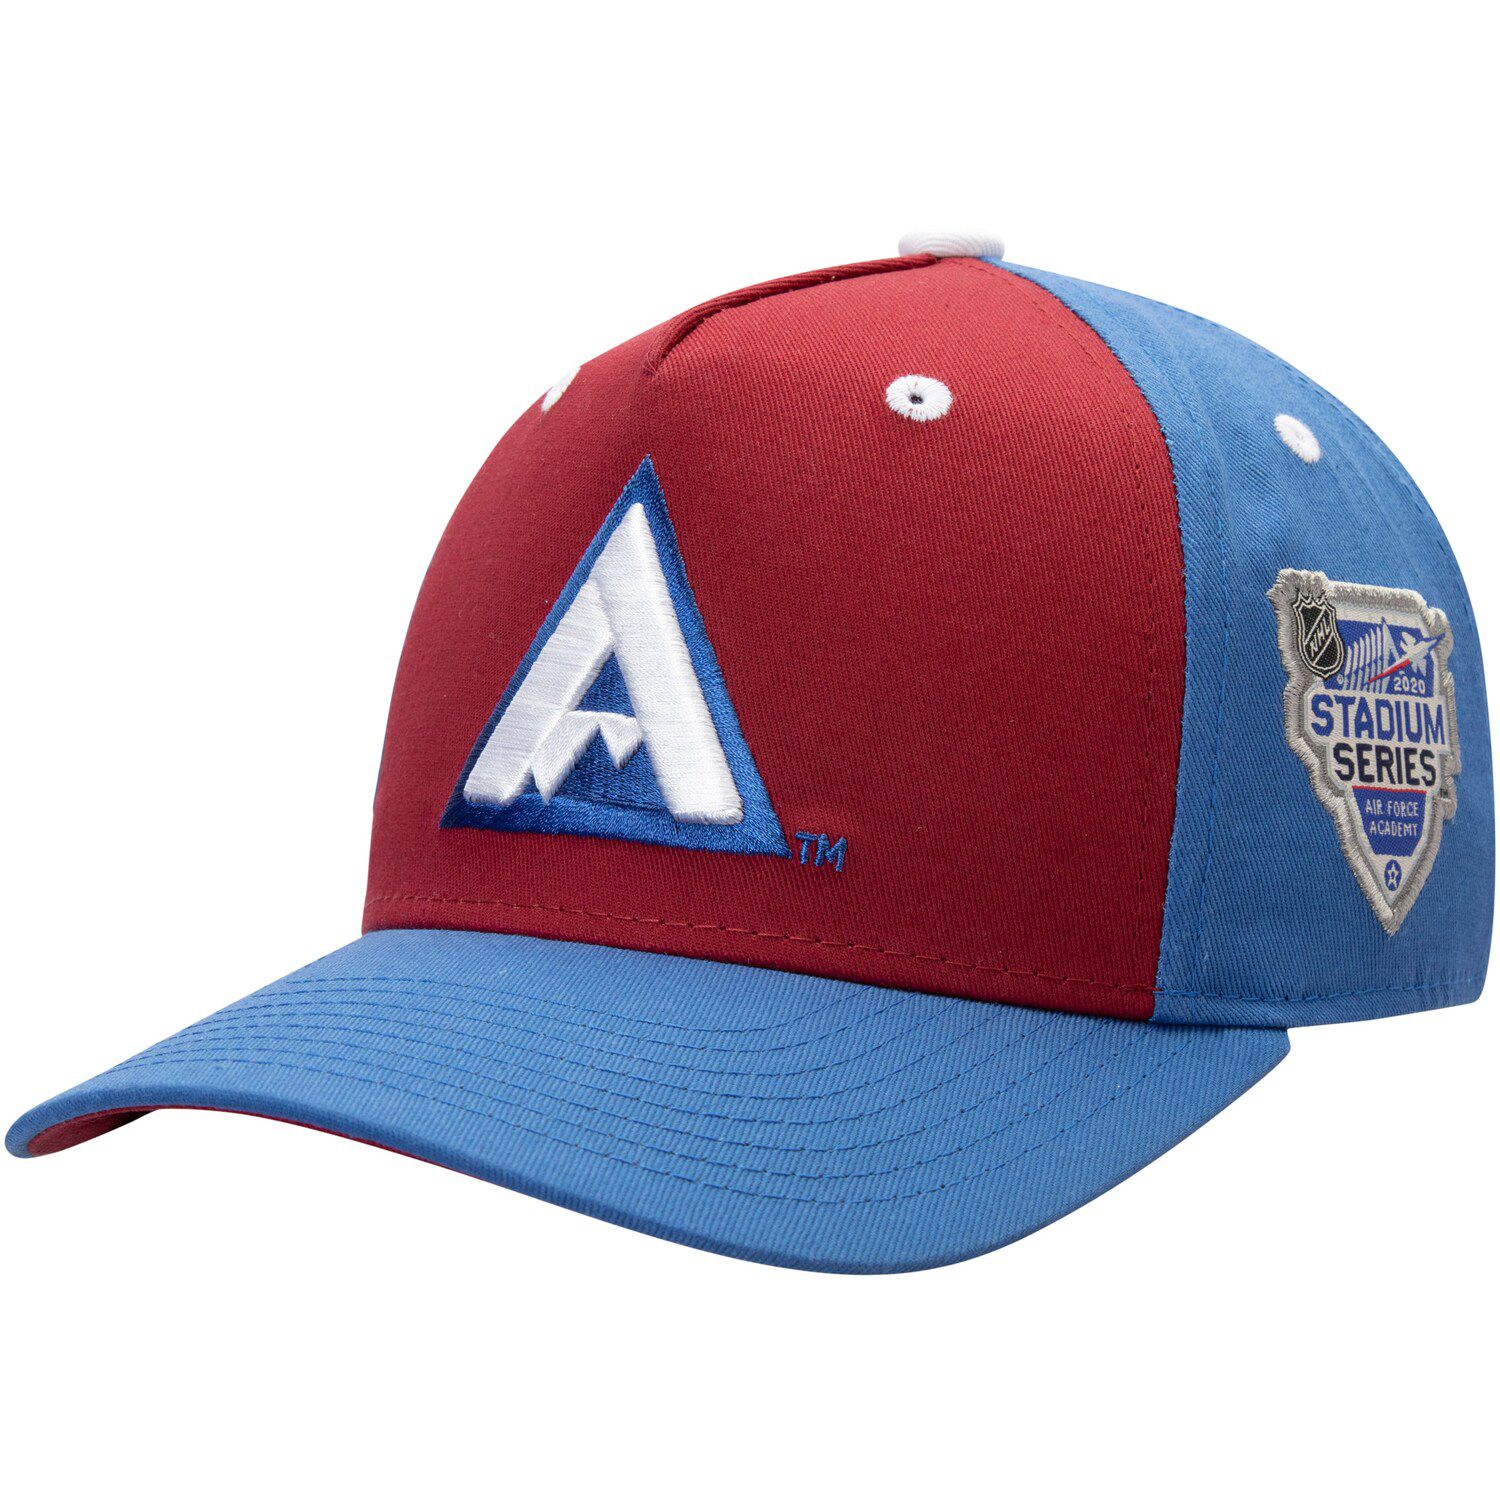 avalanche stadium series hat